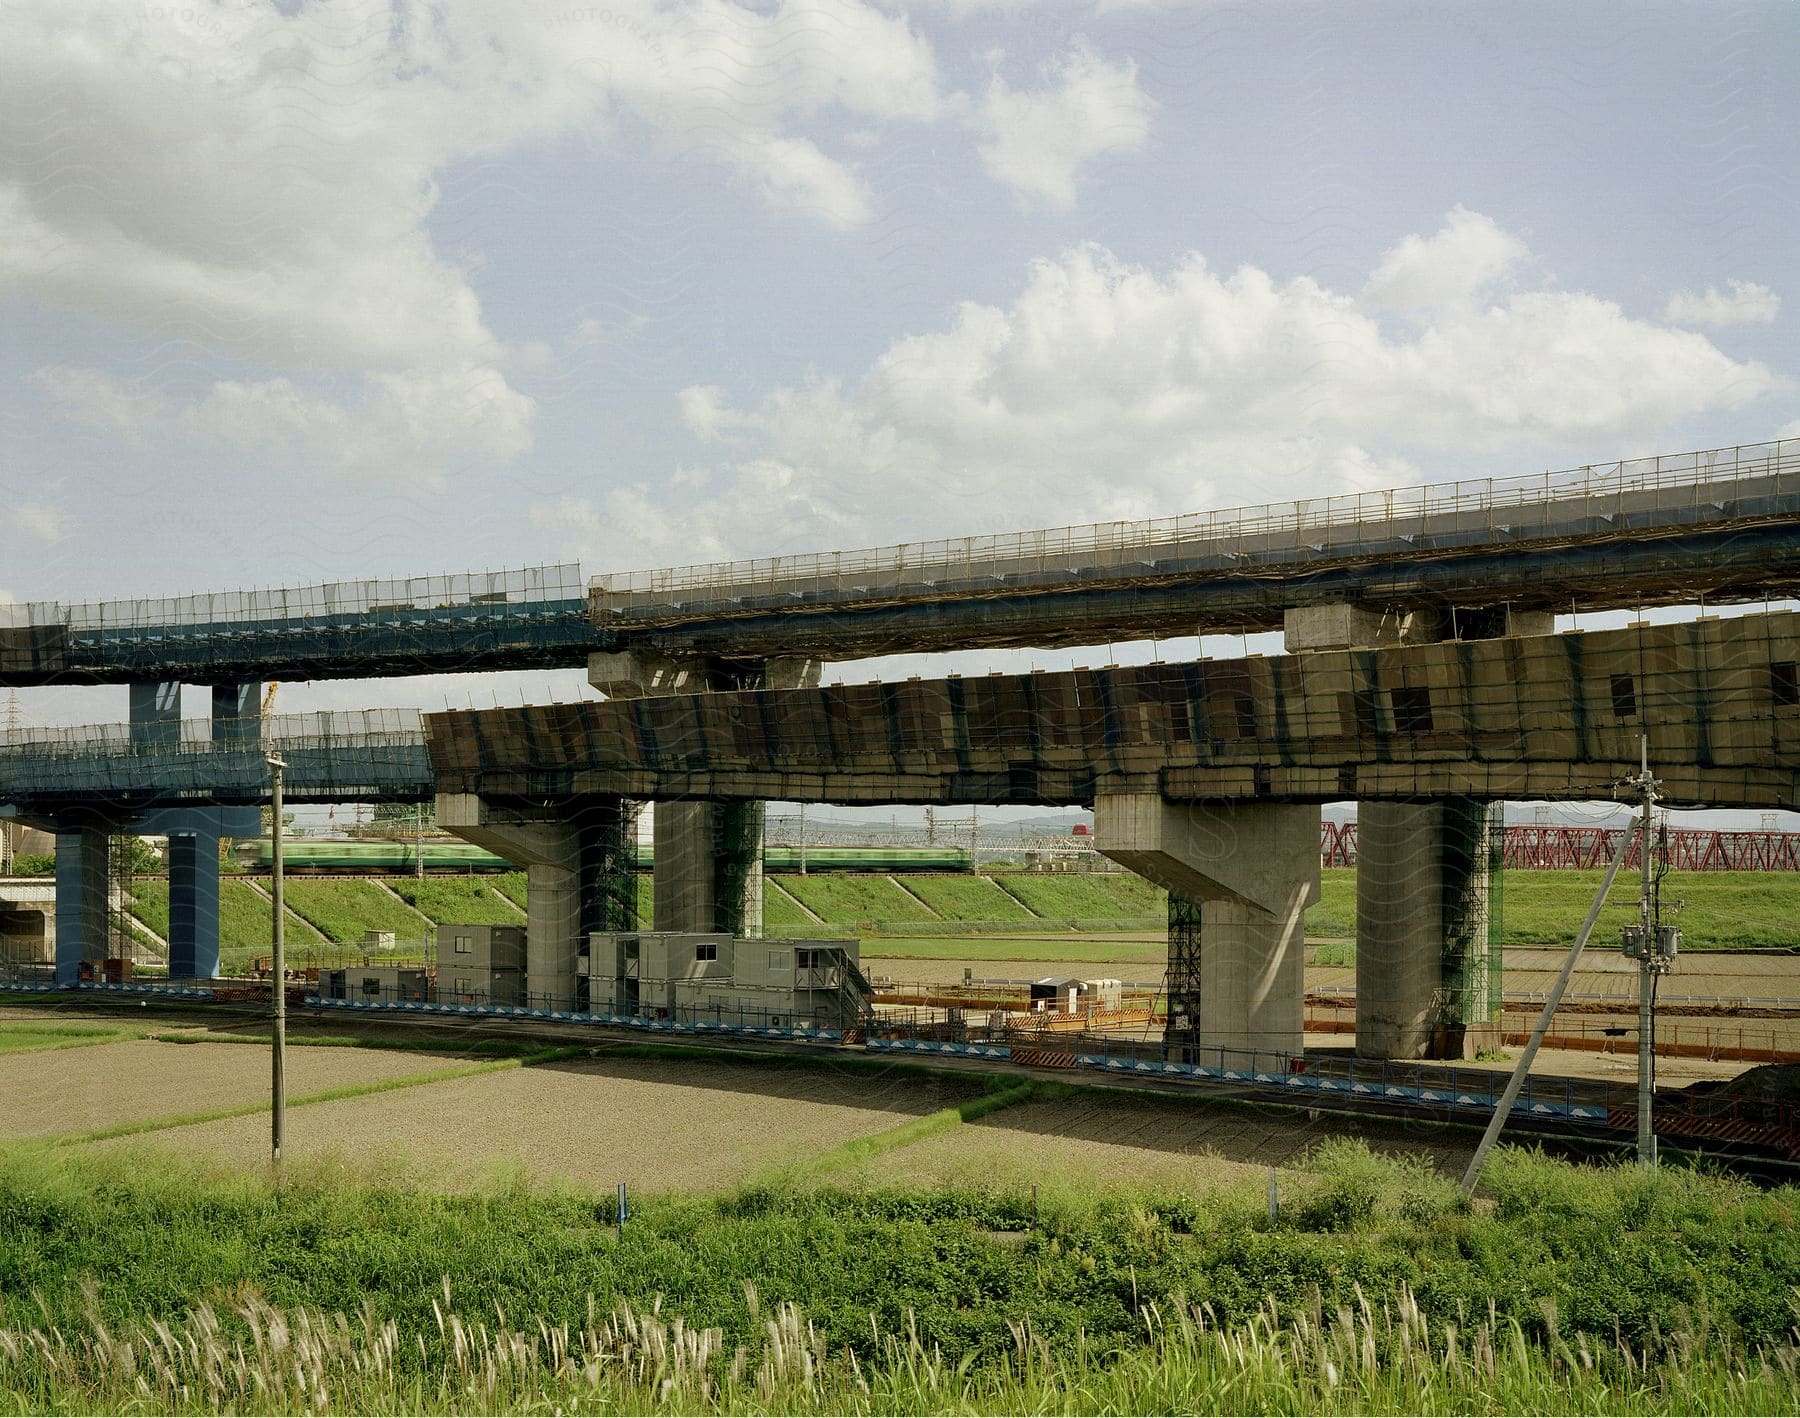 A concrete bridge crossing green vegetation